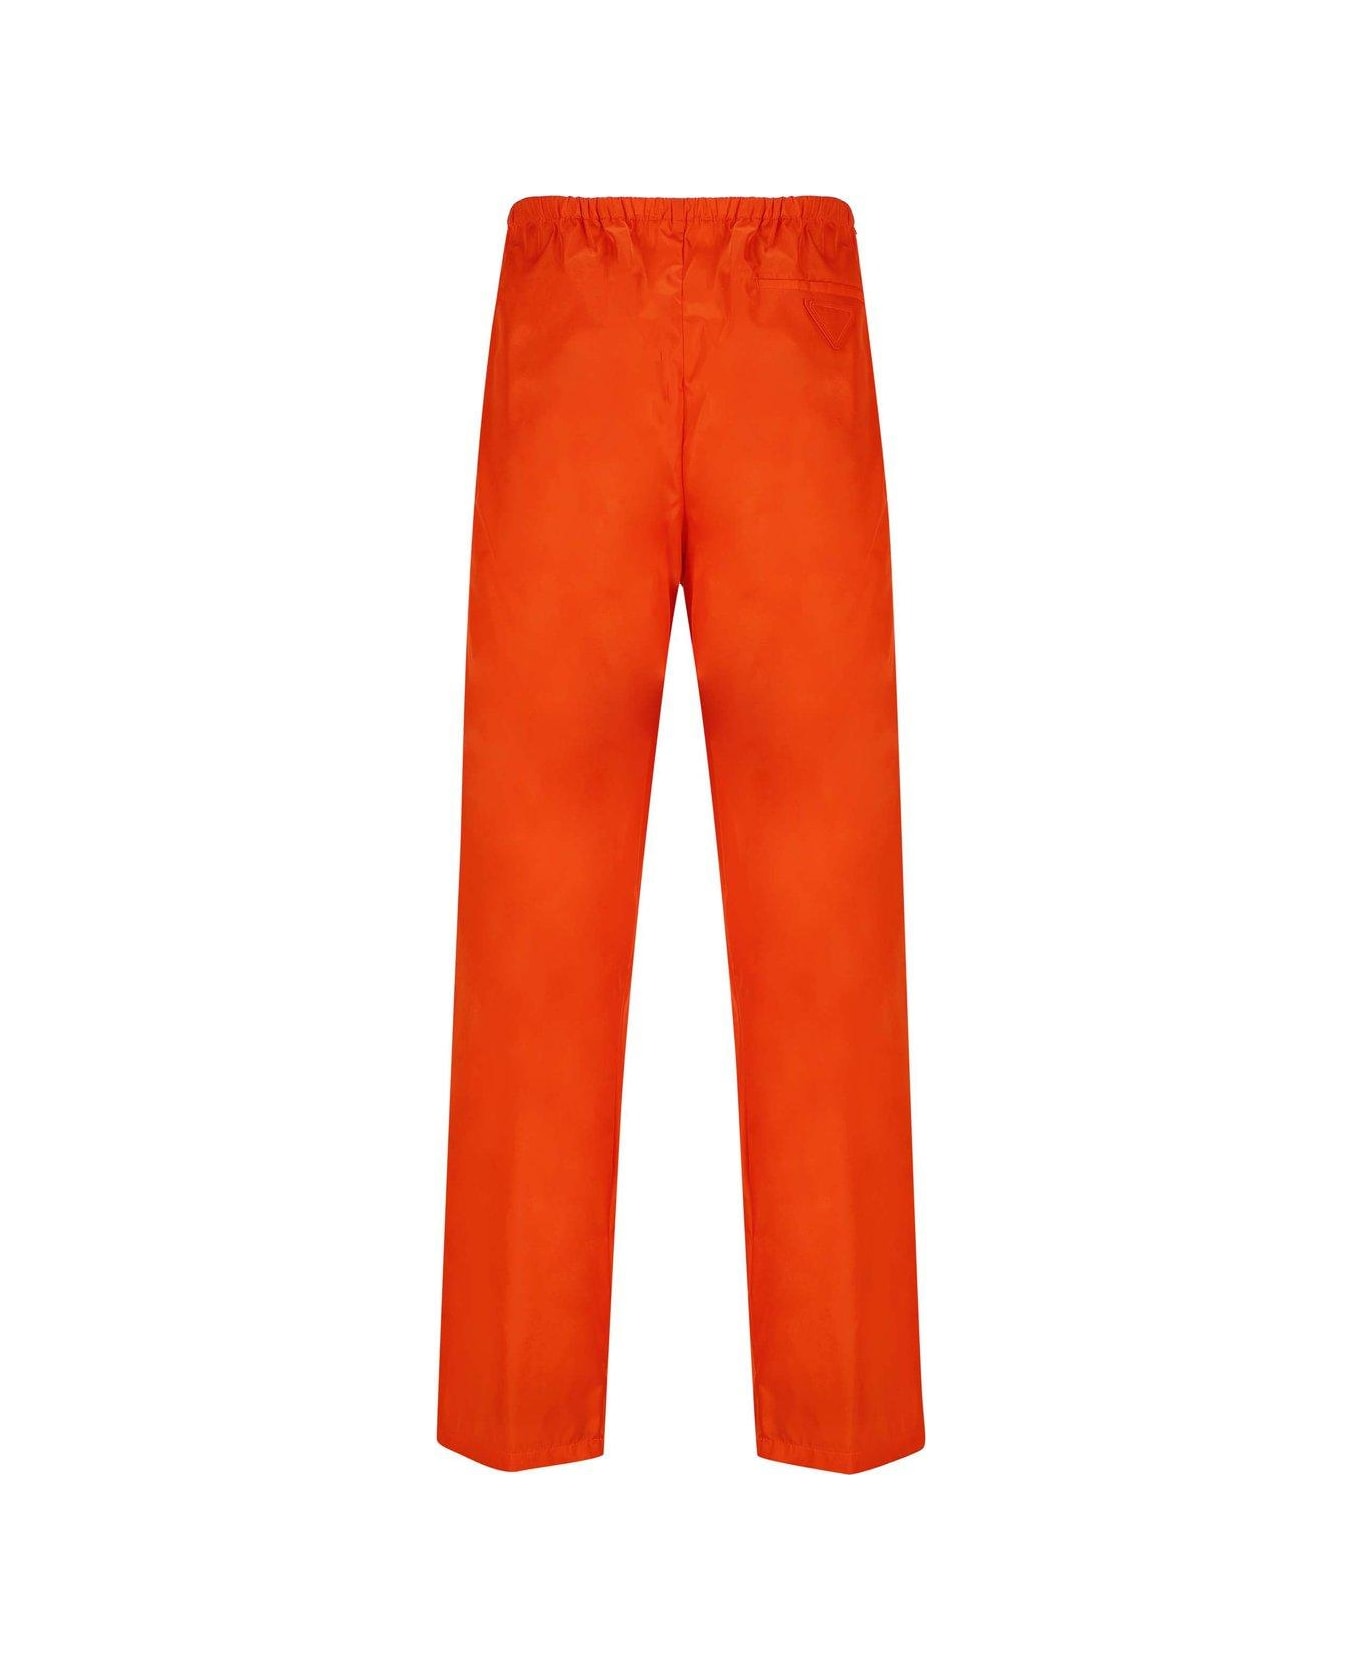 Prada High Waist Straight Leg Pants - Arancio ボトムス